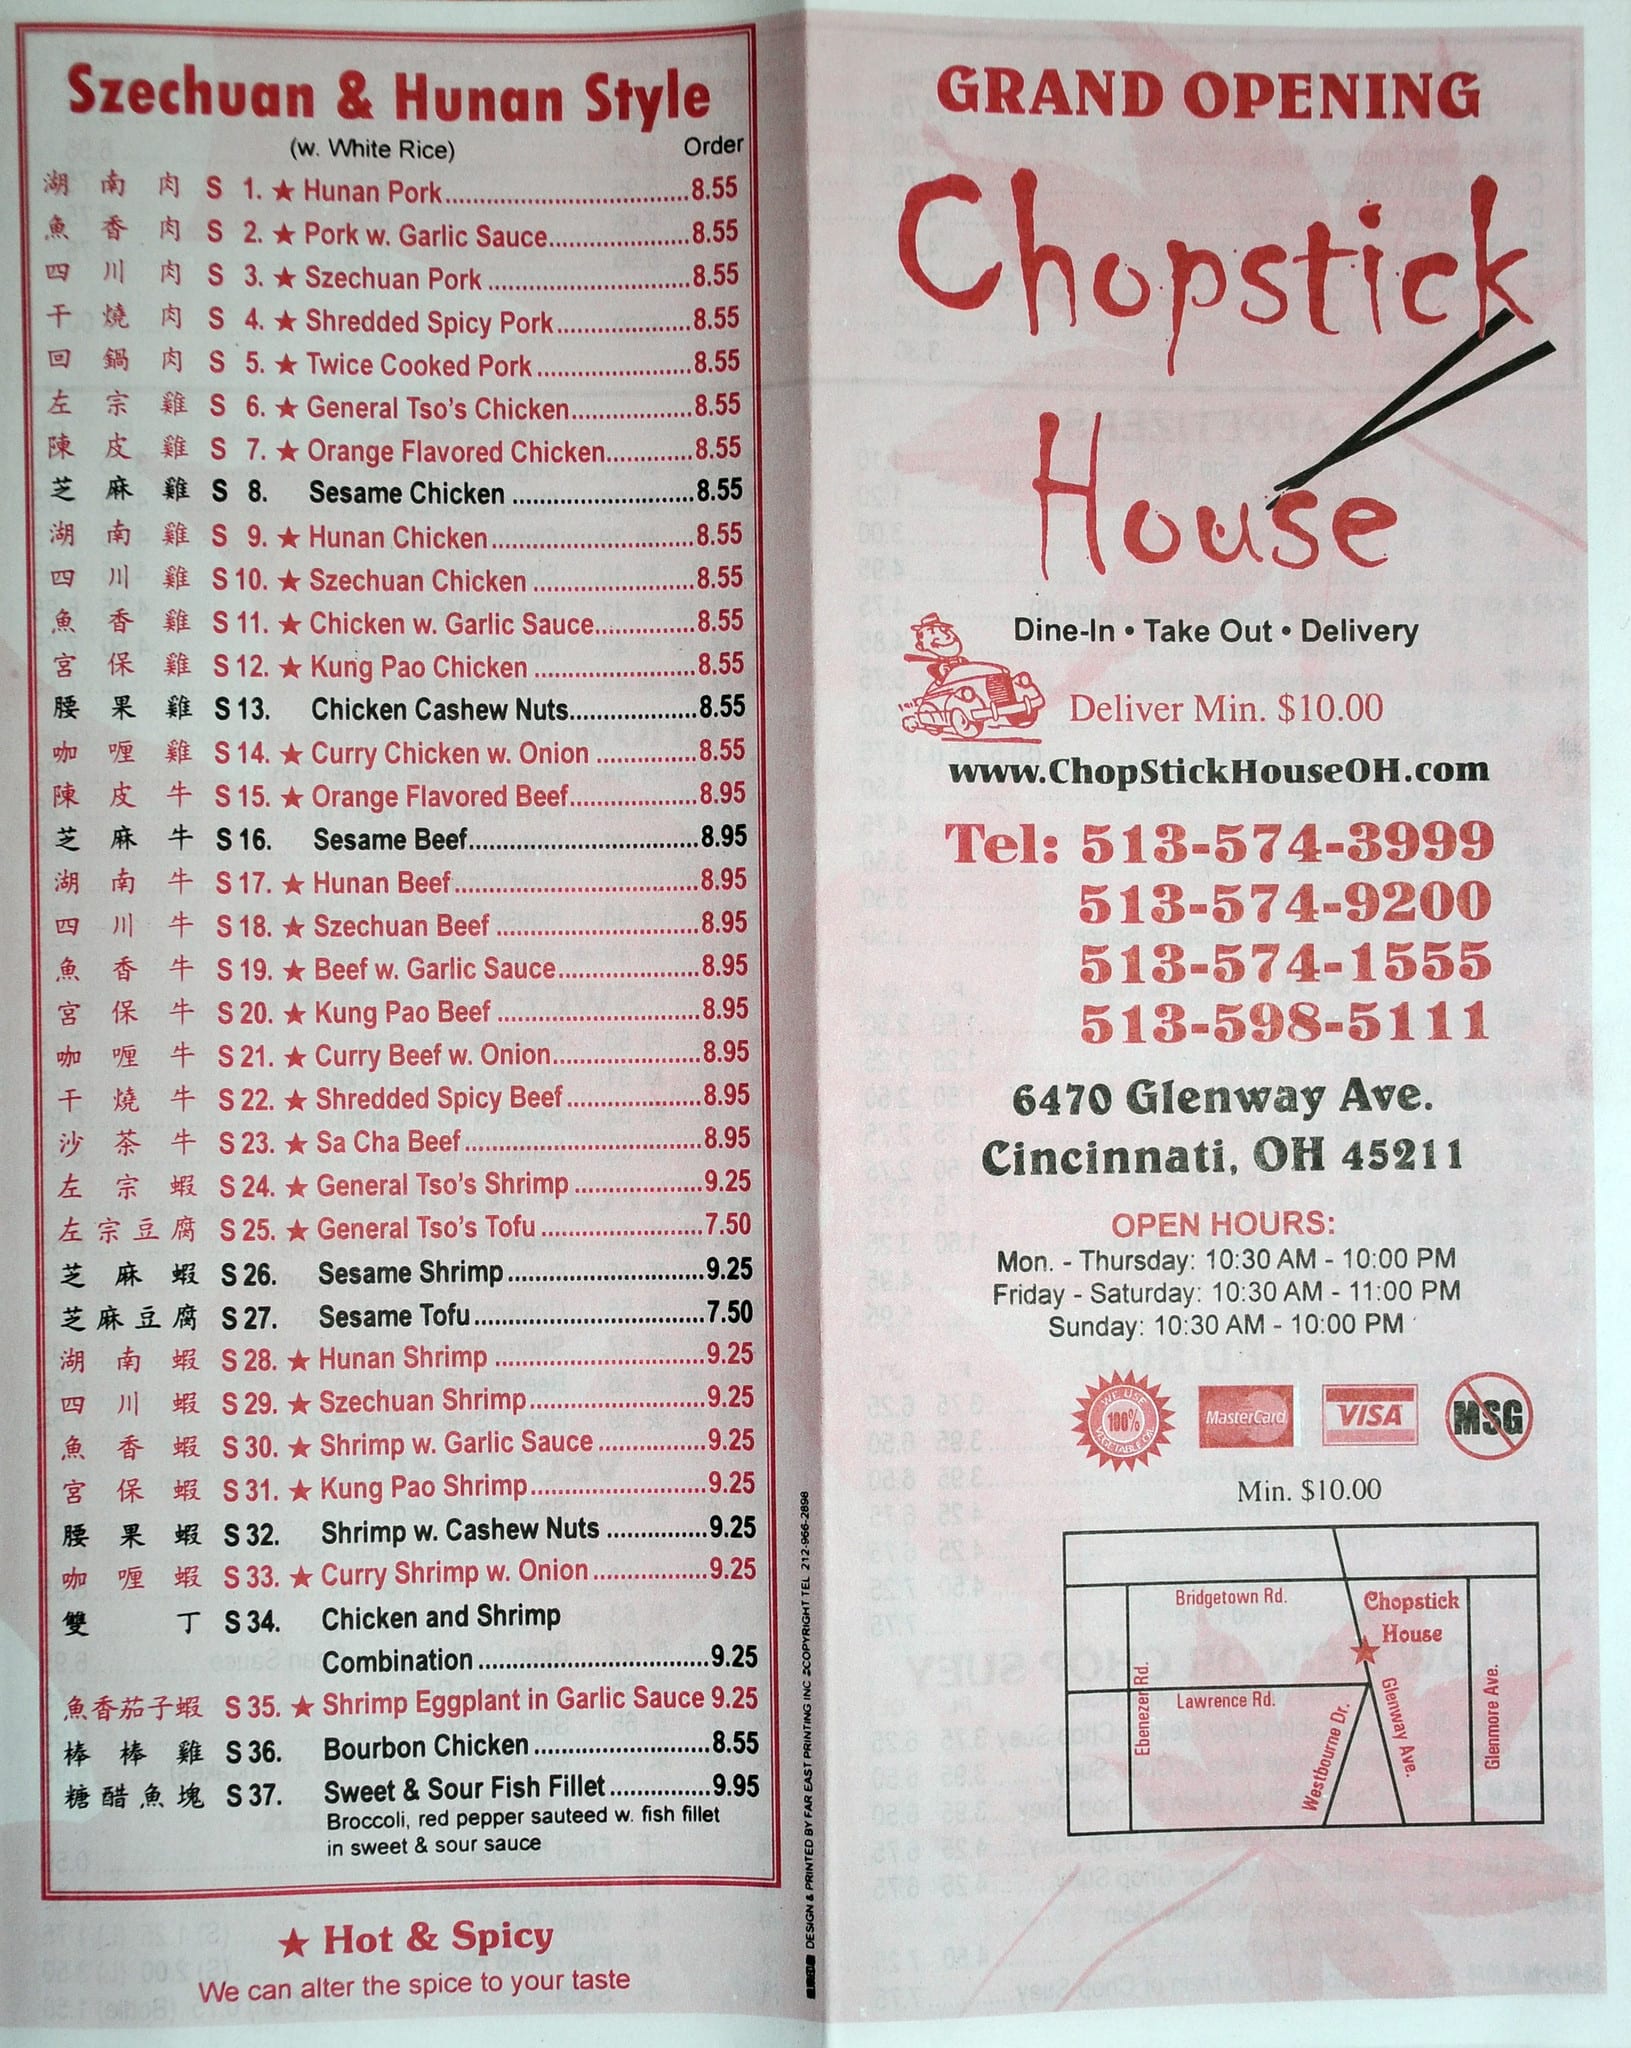 menu of chopsticks restaurant